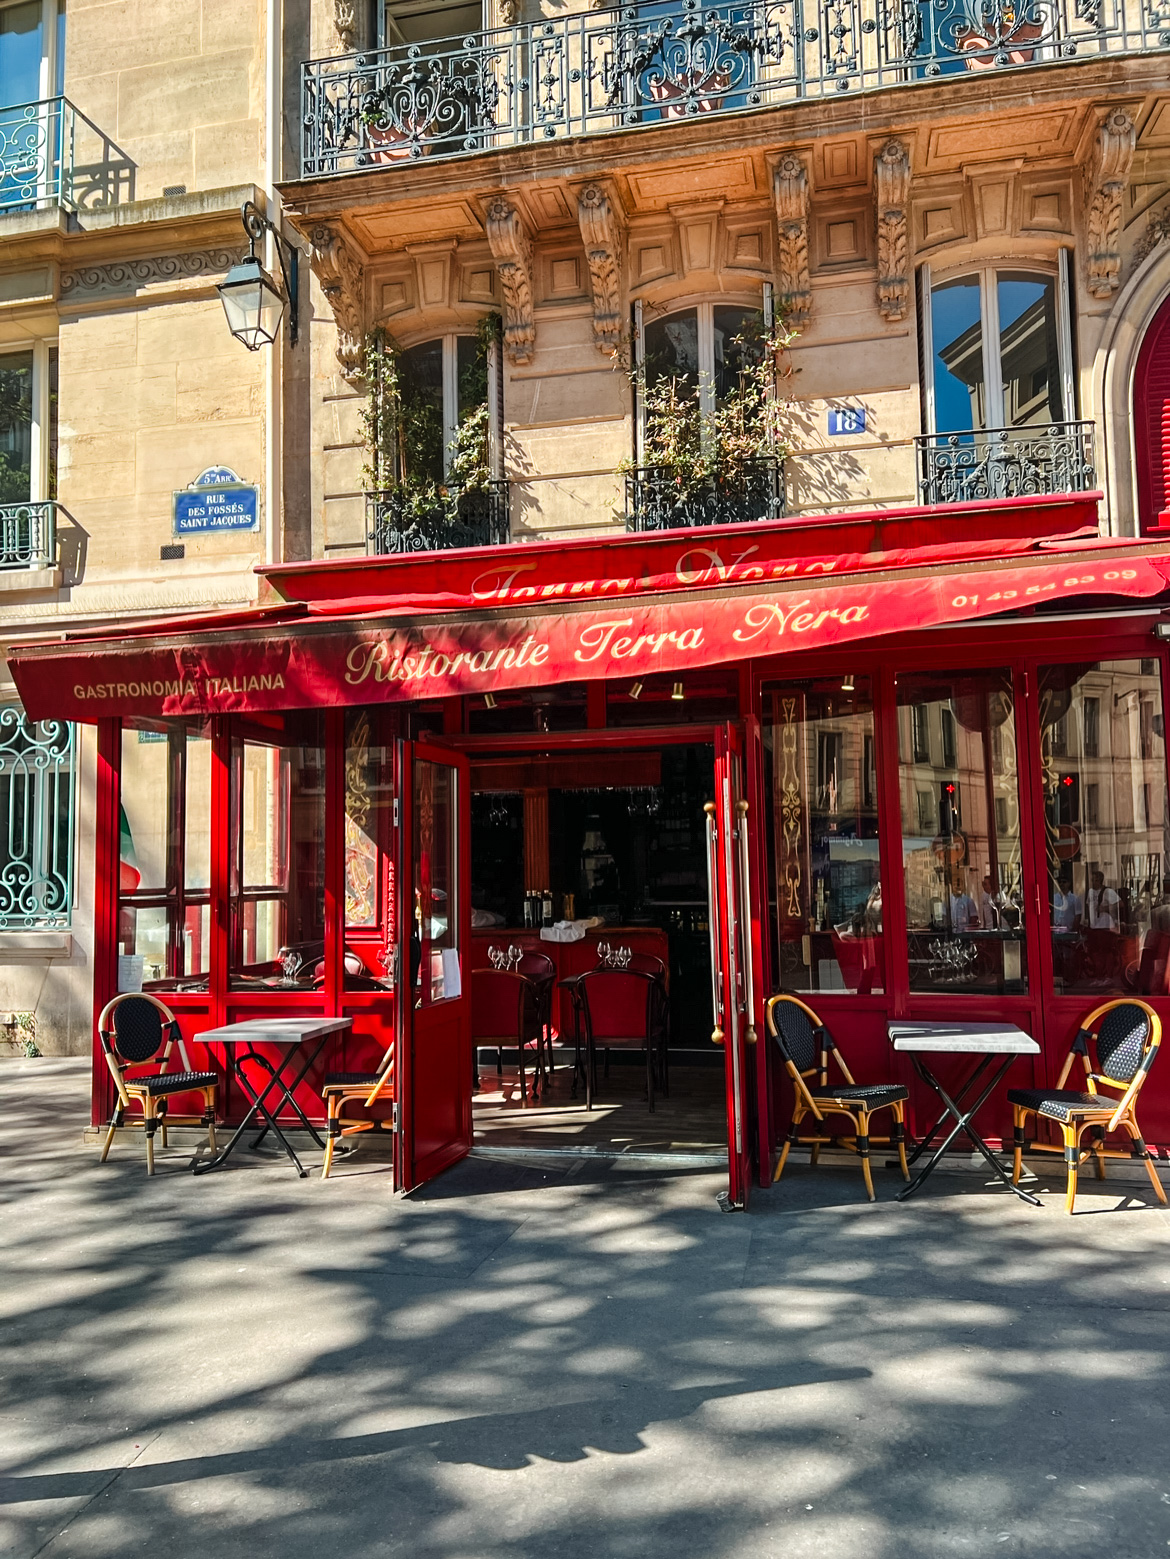 Restaurante Terra Nera- best Emily in Paris filming locations